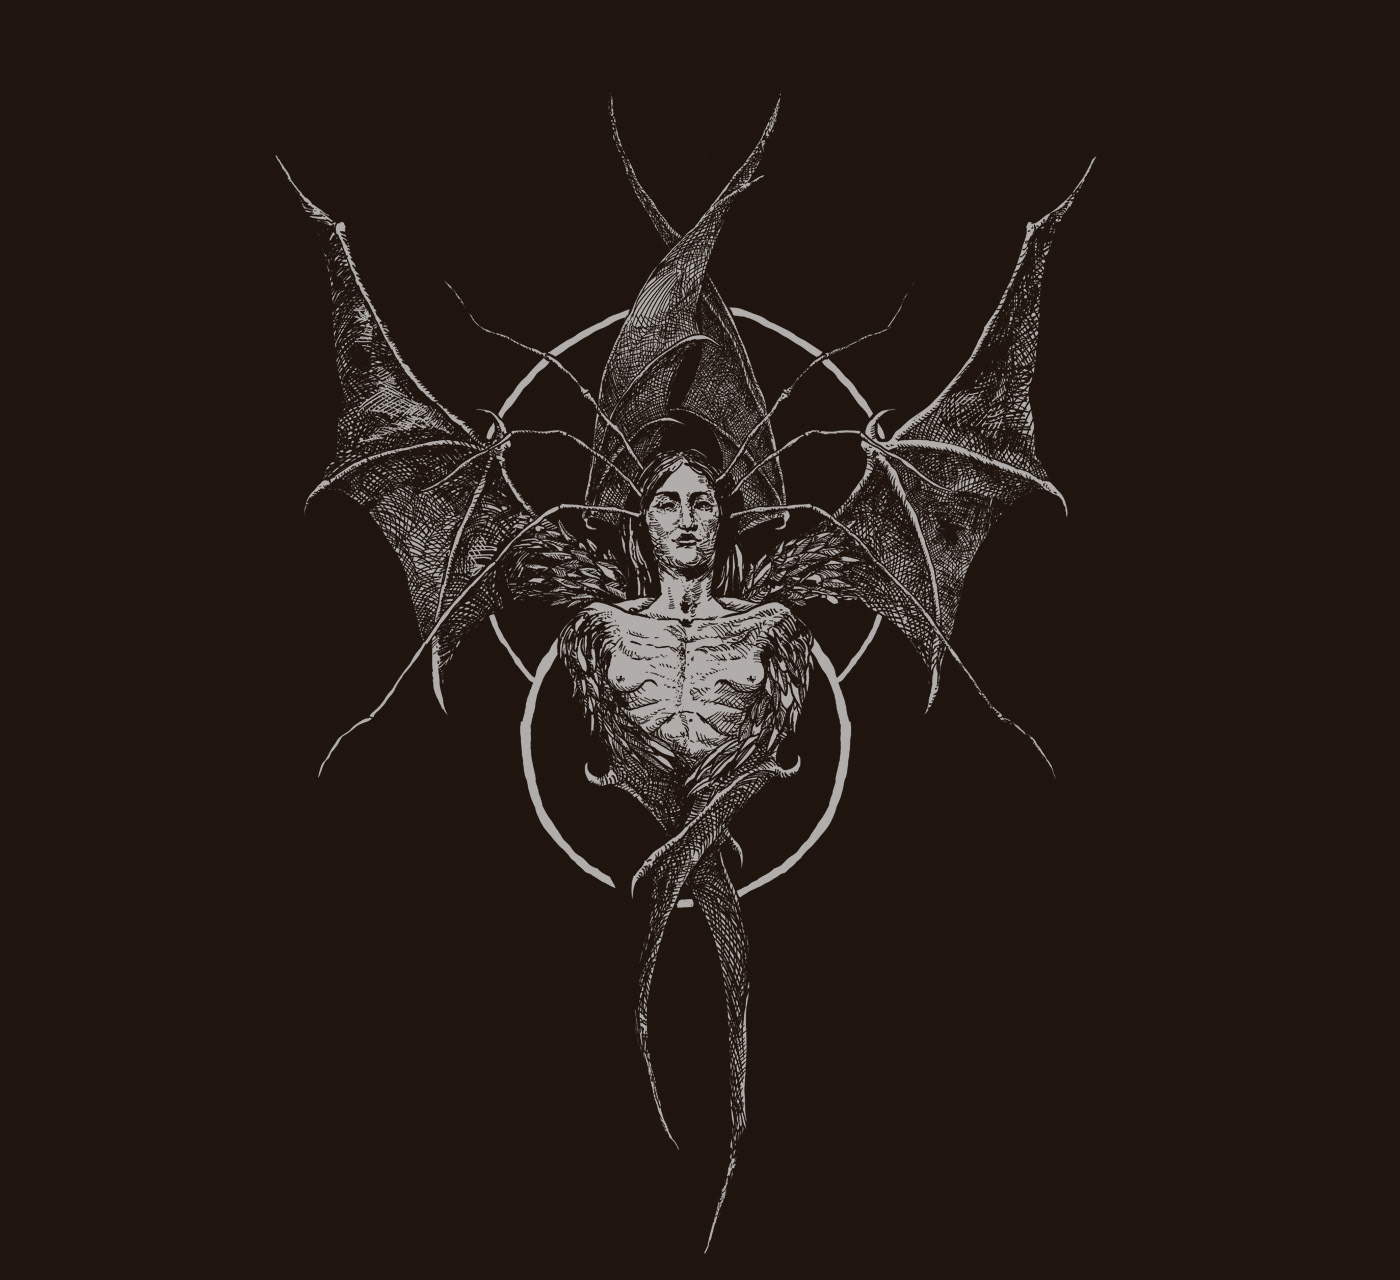 album cover dark illustration dark art black and white graphic design  engraving etching CD cover T-Shirt Design Metal Album Artworks